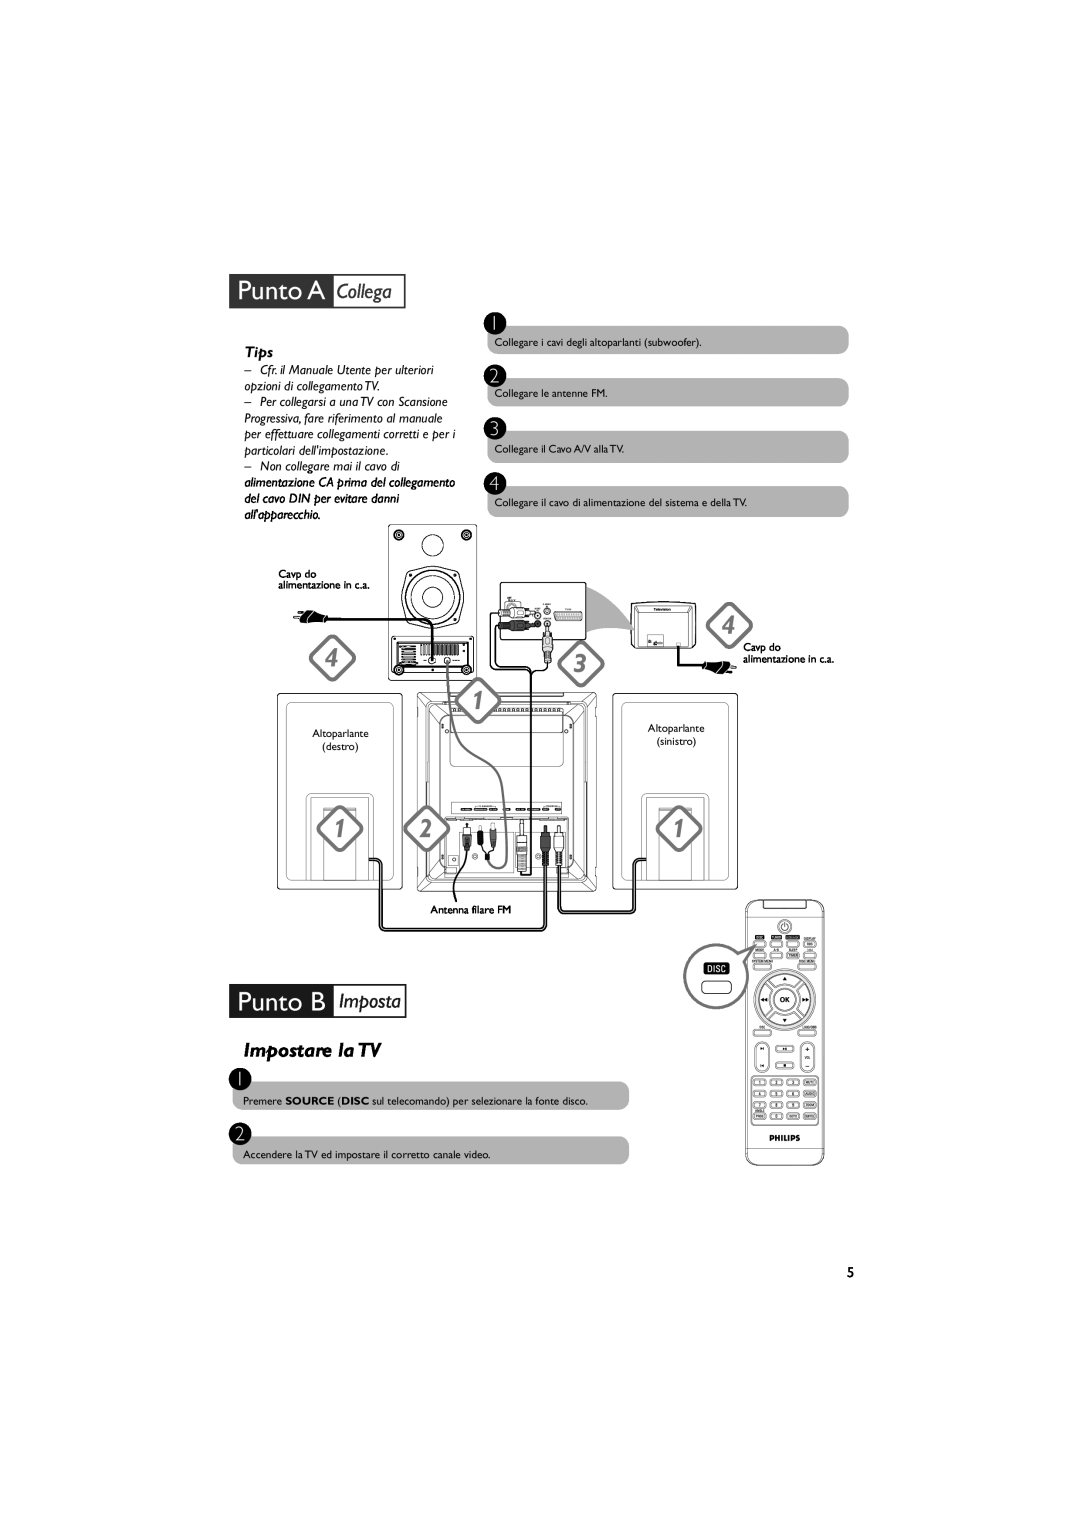 Philips MCD288E/12 user manual Punto B Imposta, Impostare la TV, Punto A Collega, Tips, Cavp do, Altoparlante 